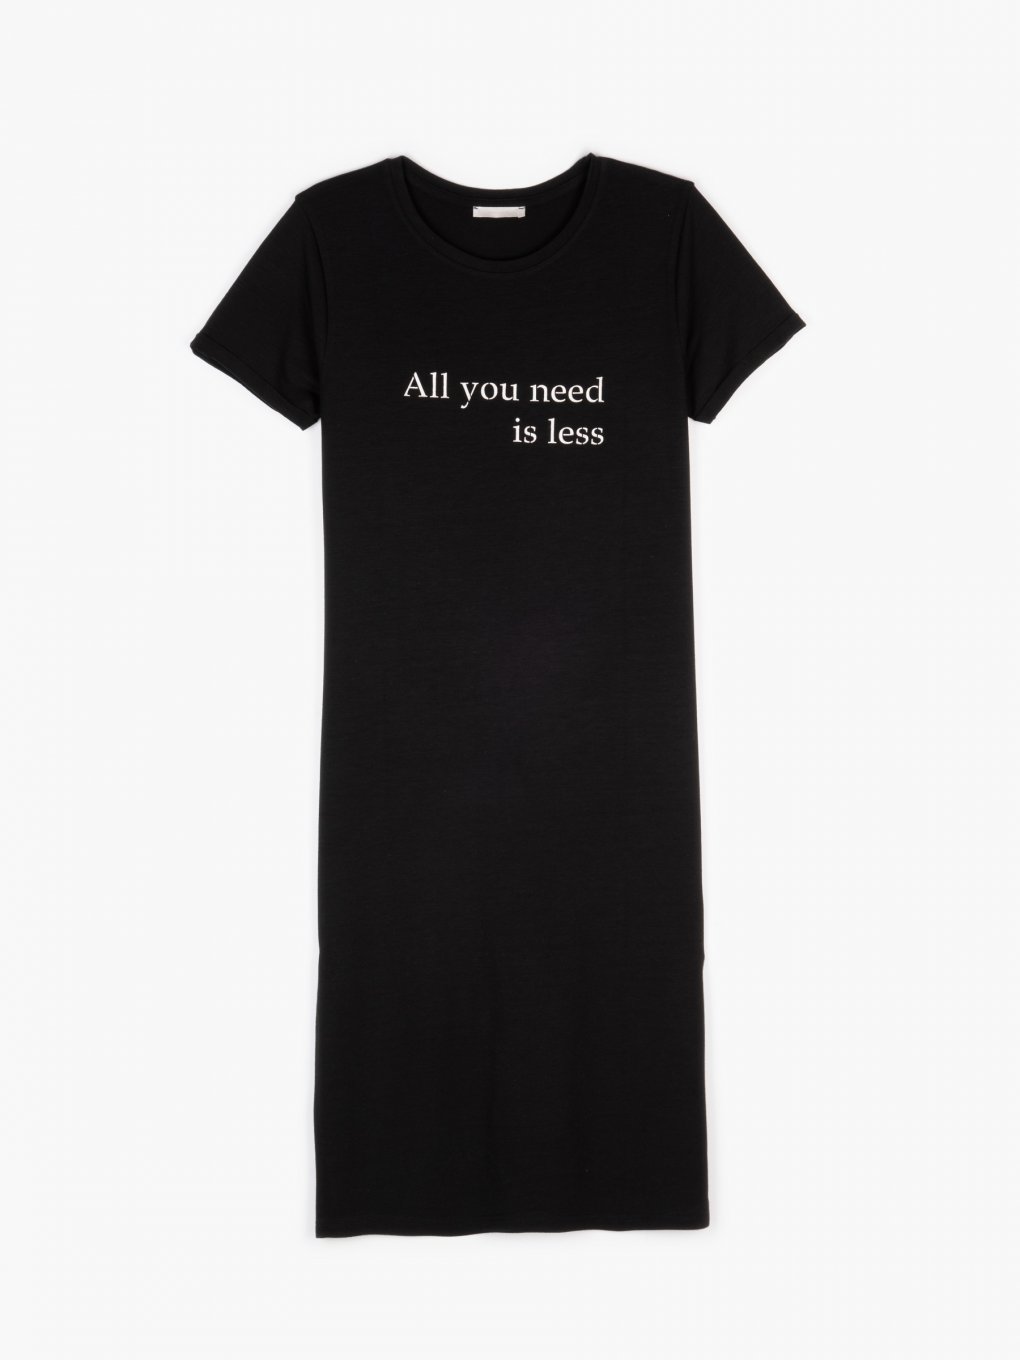 T-shirtowa sukienka midi z napisem